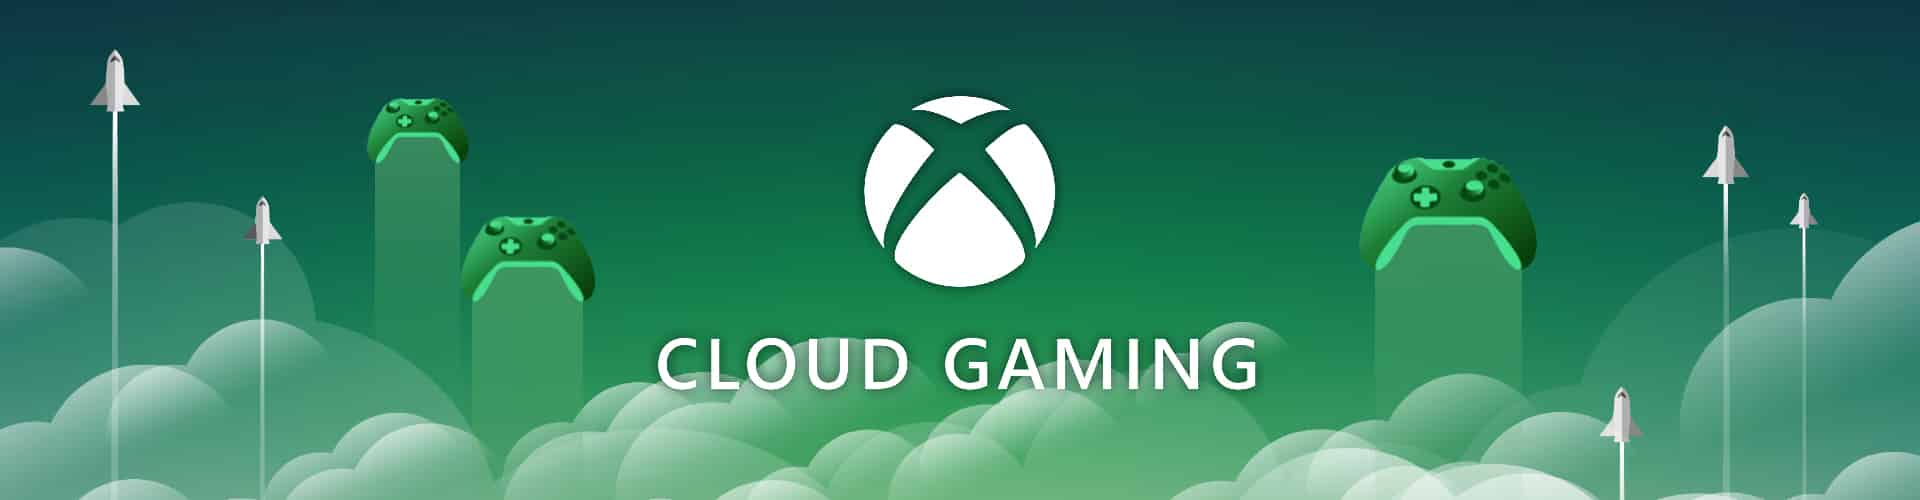 Xbox Cloud Gaming News Header